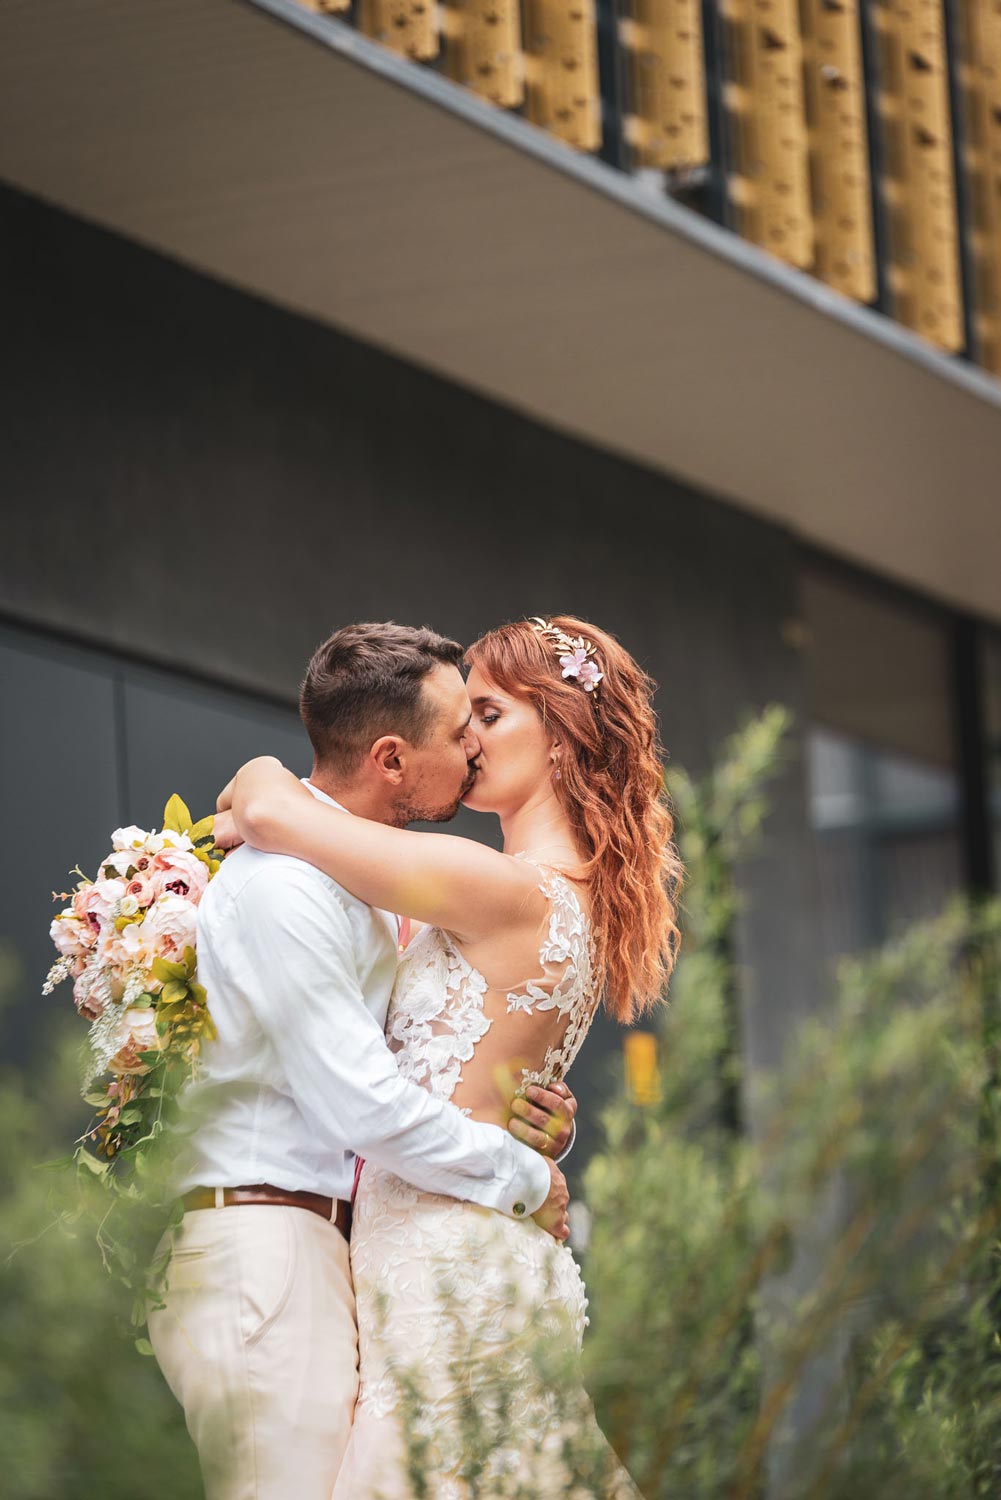 Pruutpaar suudlemas pulmafotograafi ees